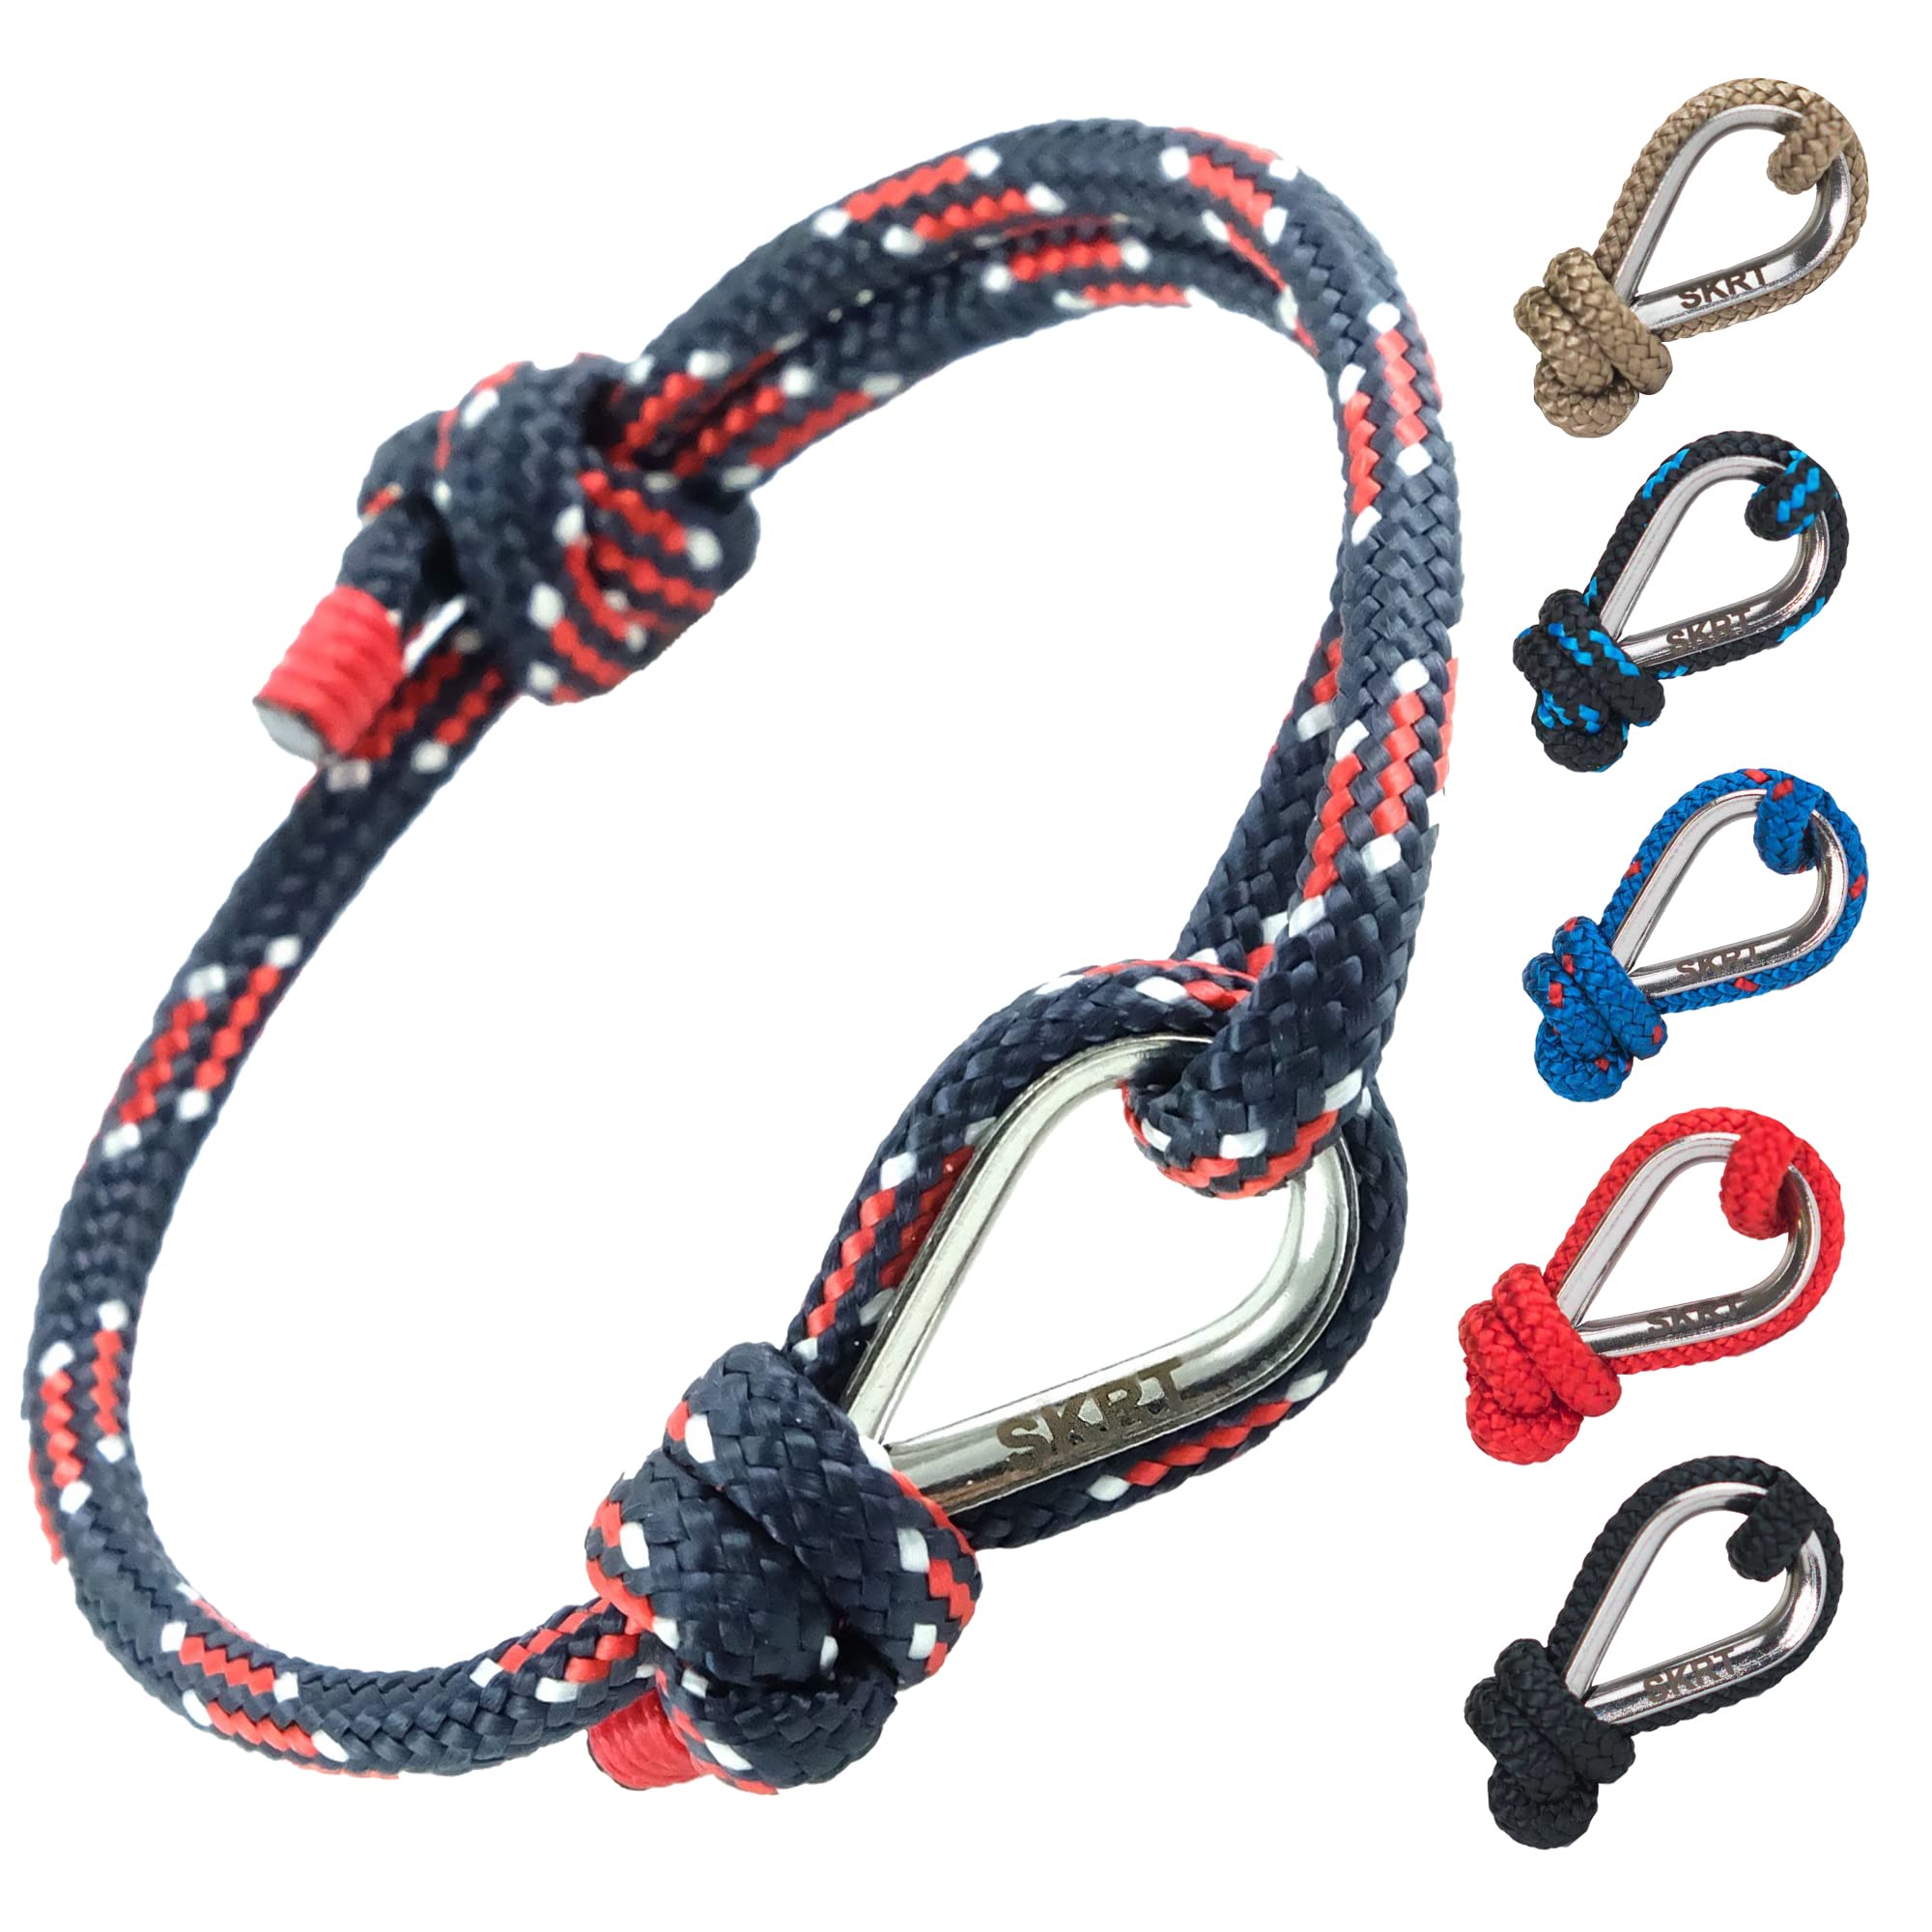 Shkertik Adjustable Nautical Bracelet for Adventure Seekers, Handmade Rope Bracelet for Men and Women, Life-Proof Nautical Rope Bracelet, Stylish Rope Bracelets to Tell Your Unique Story